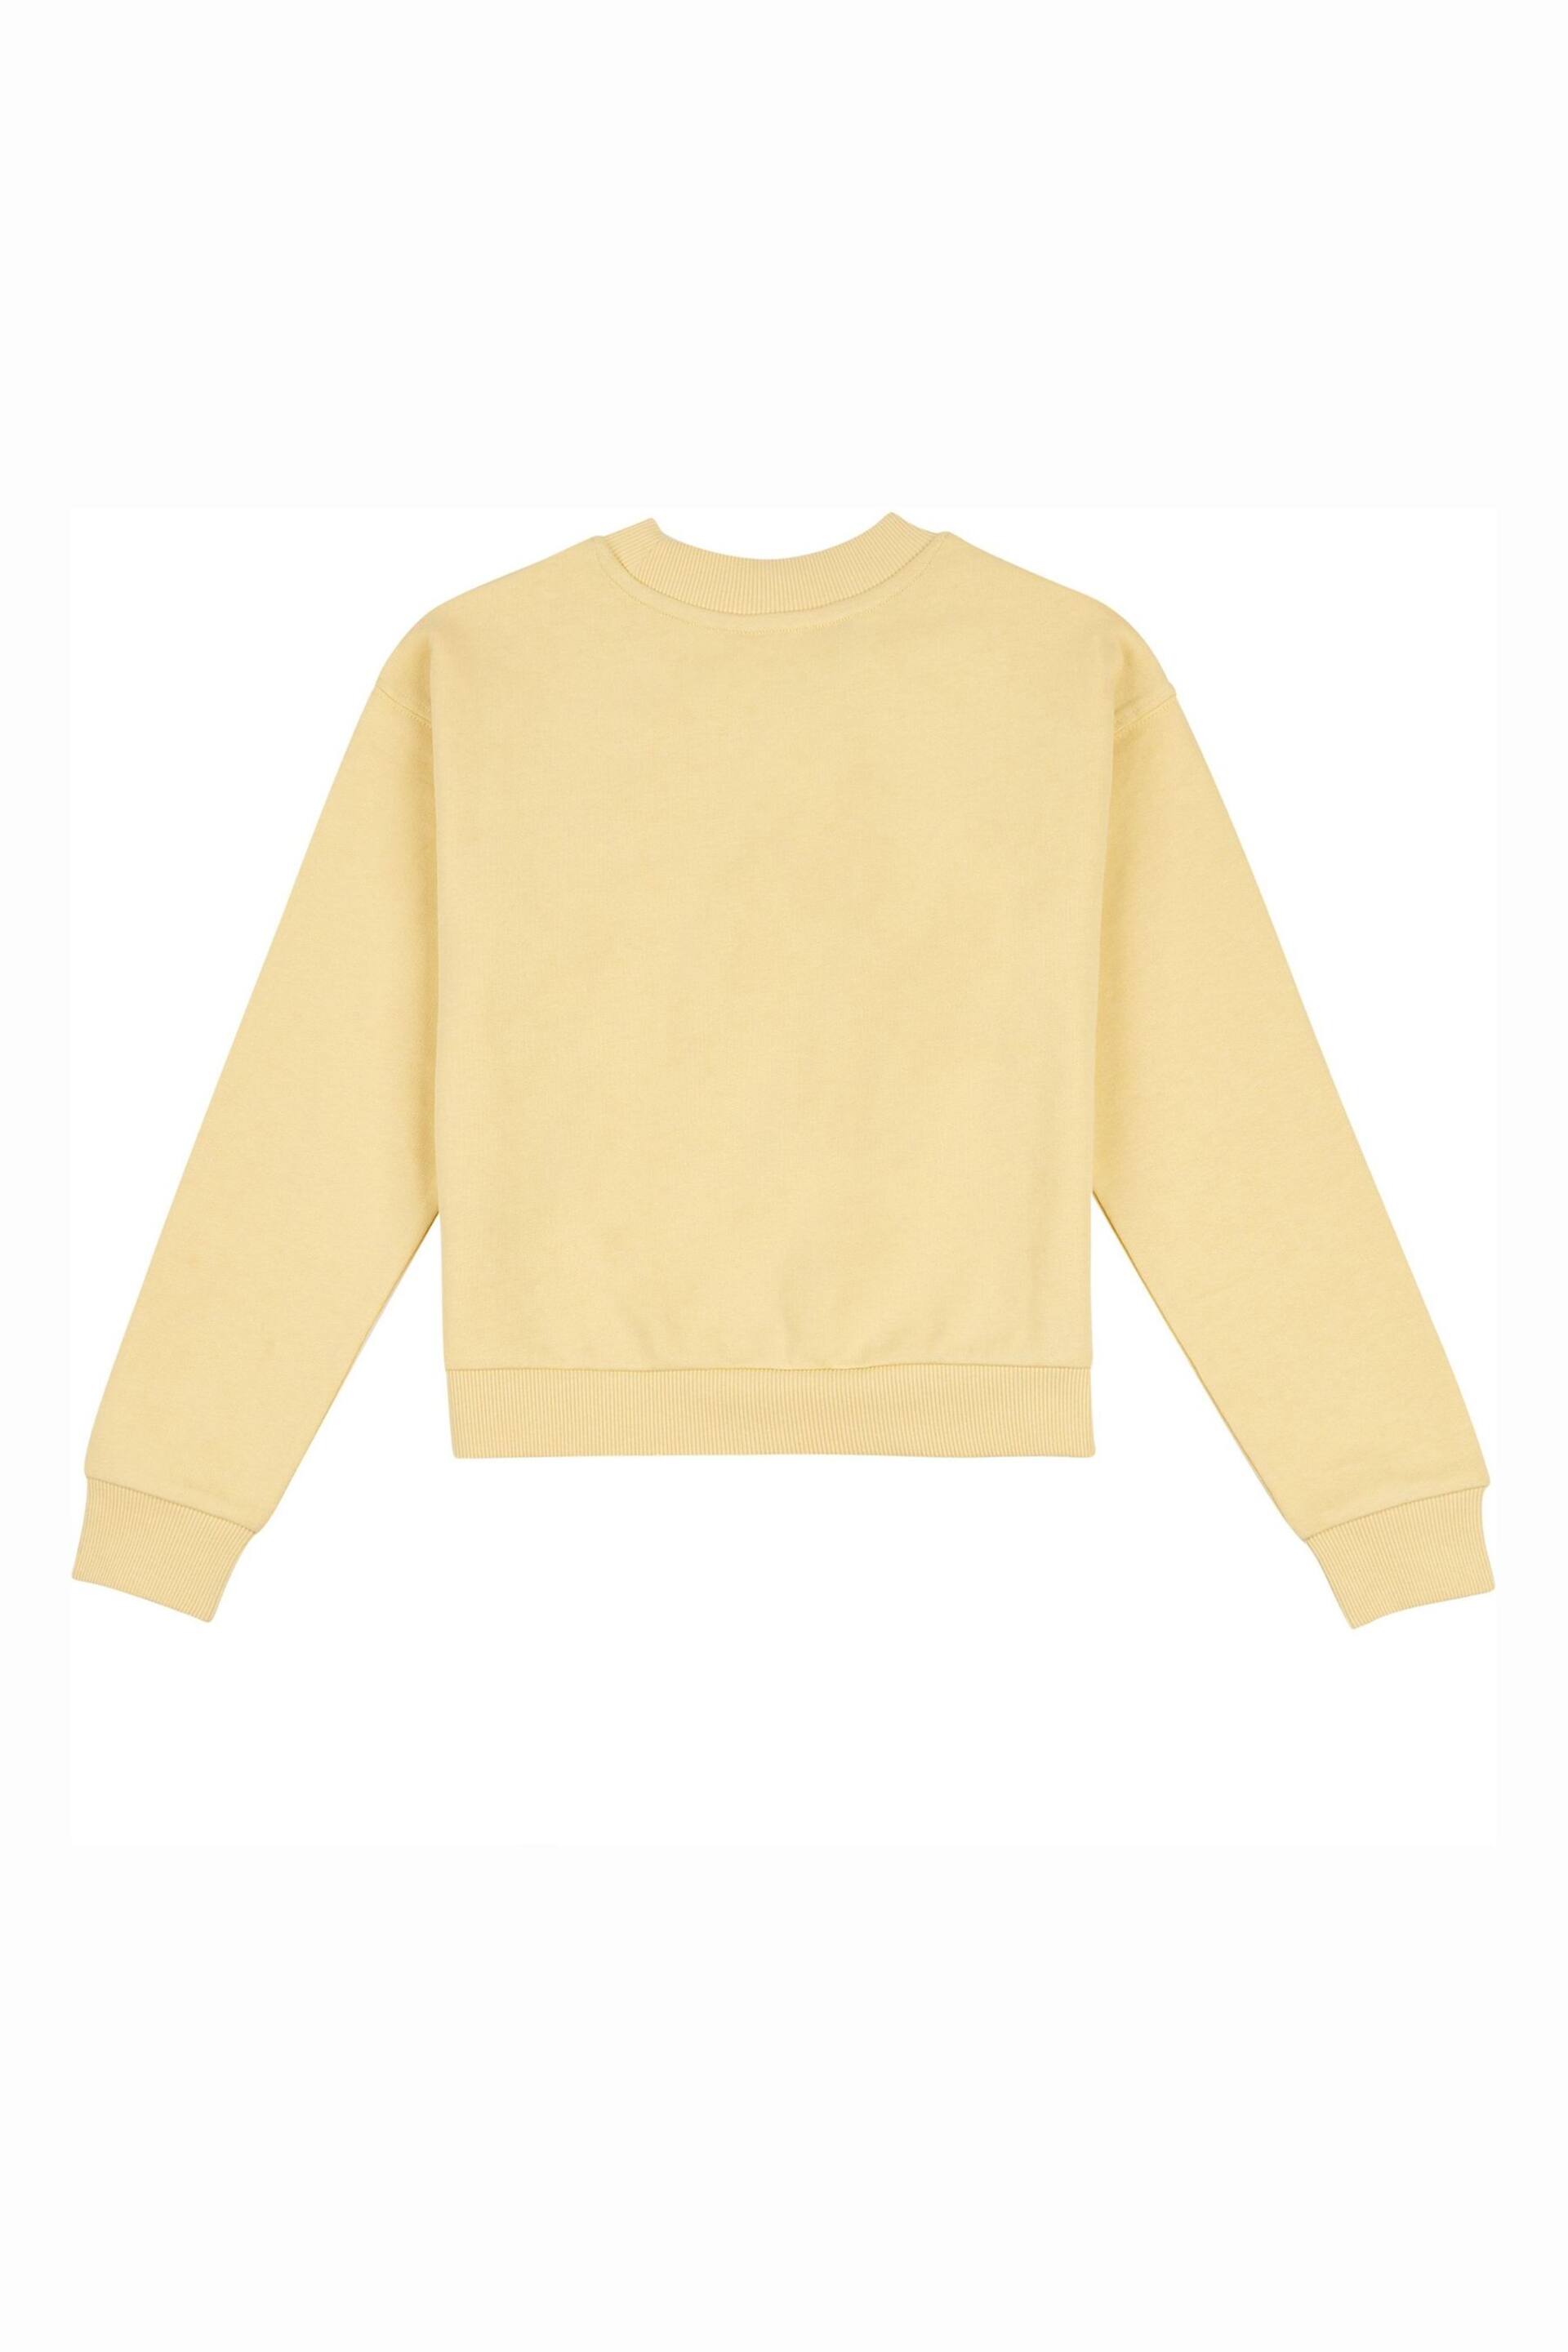 Lee Girls Yellow Regular Fit Badge Sweatshirt - Image 7 of 8